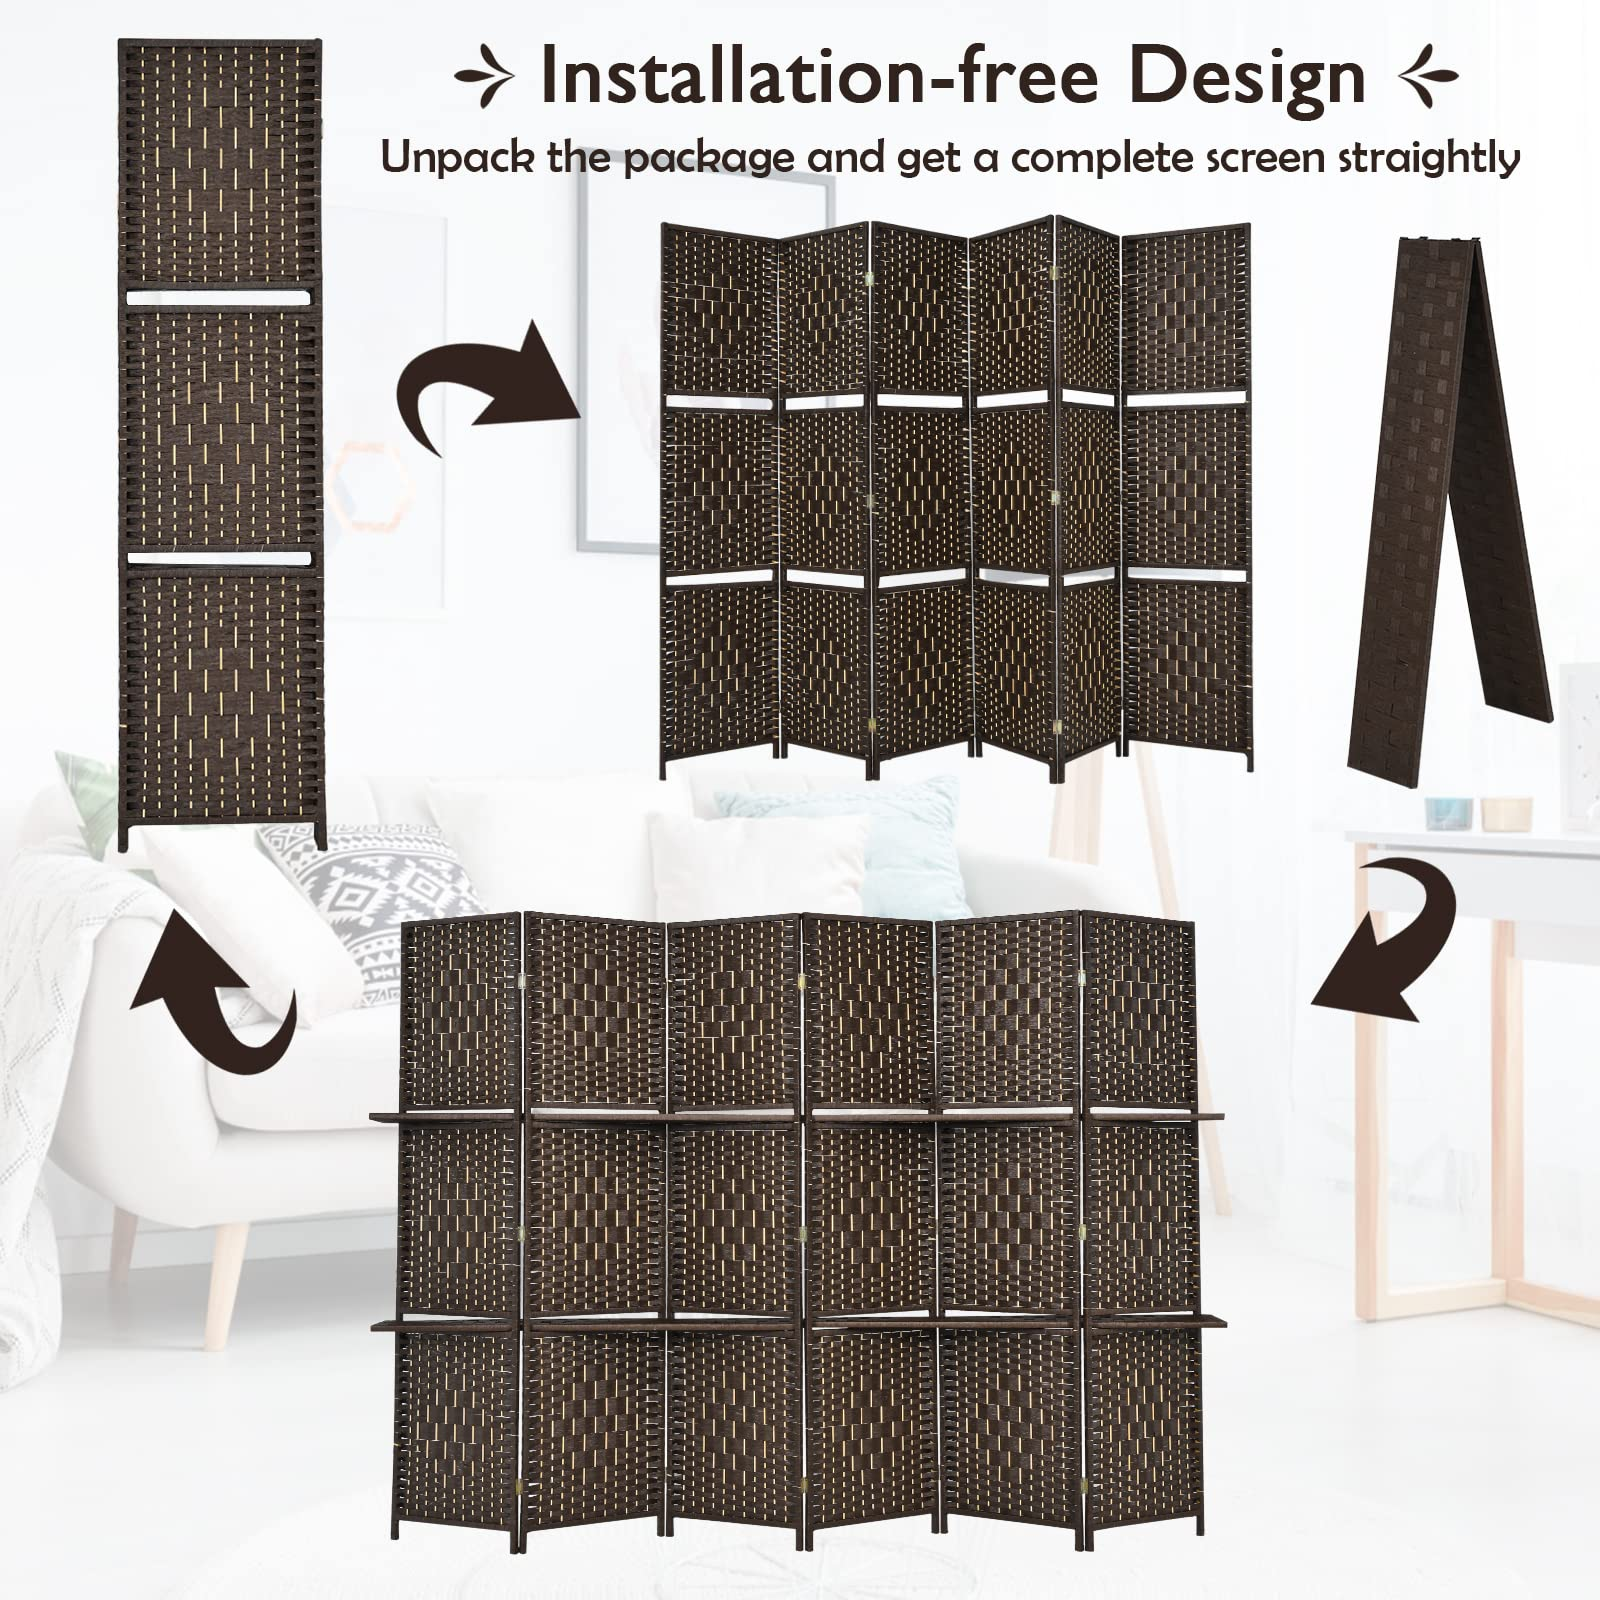 Giantex 6 Panel Room Divider Screen, 6Ft Hand-Woven Rattan Wood Room Divider w/ Shelves